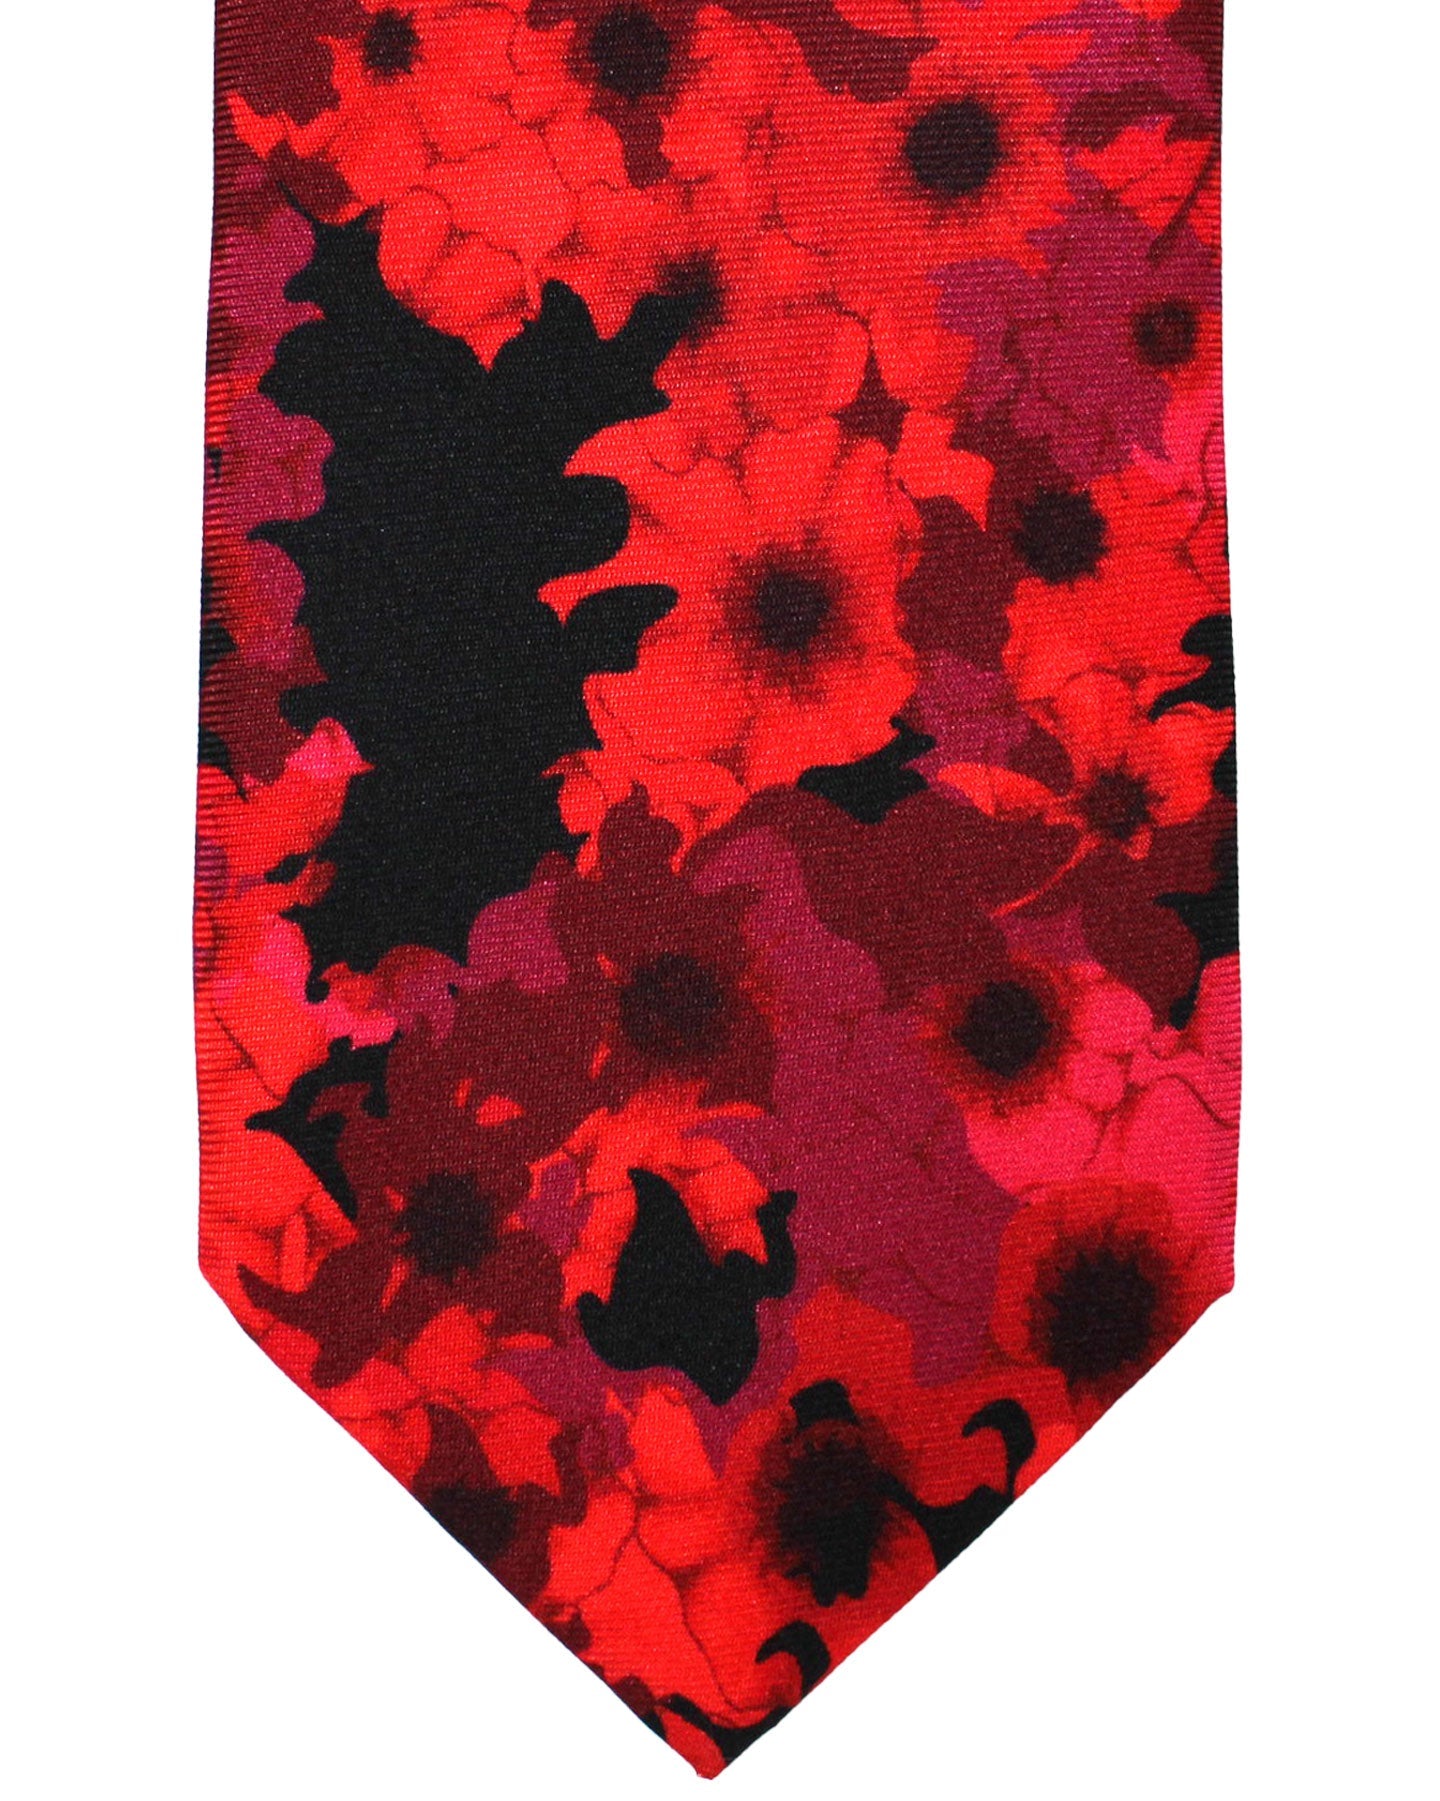 Versace Silk Tie Black Red Floral - Narrow Necktie